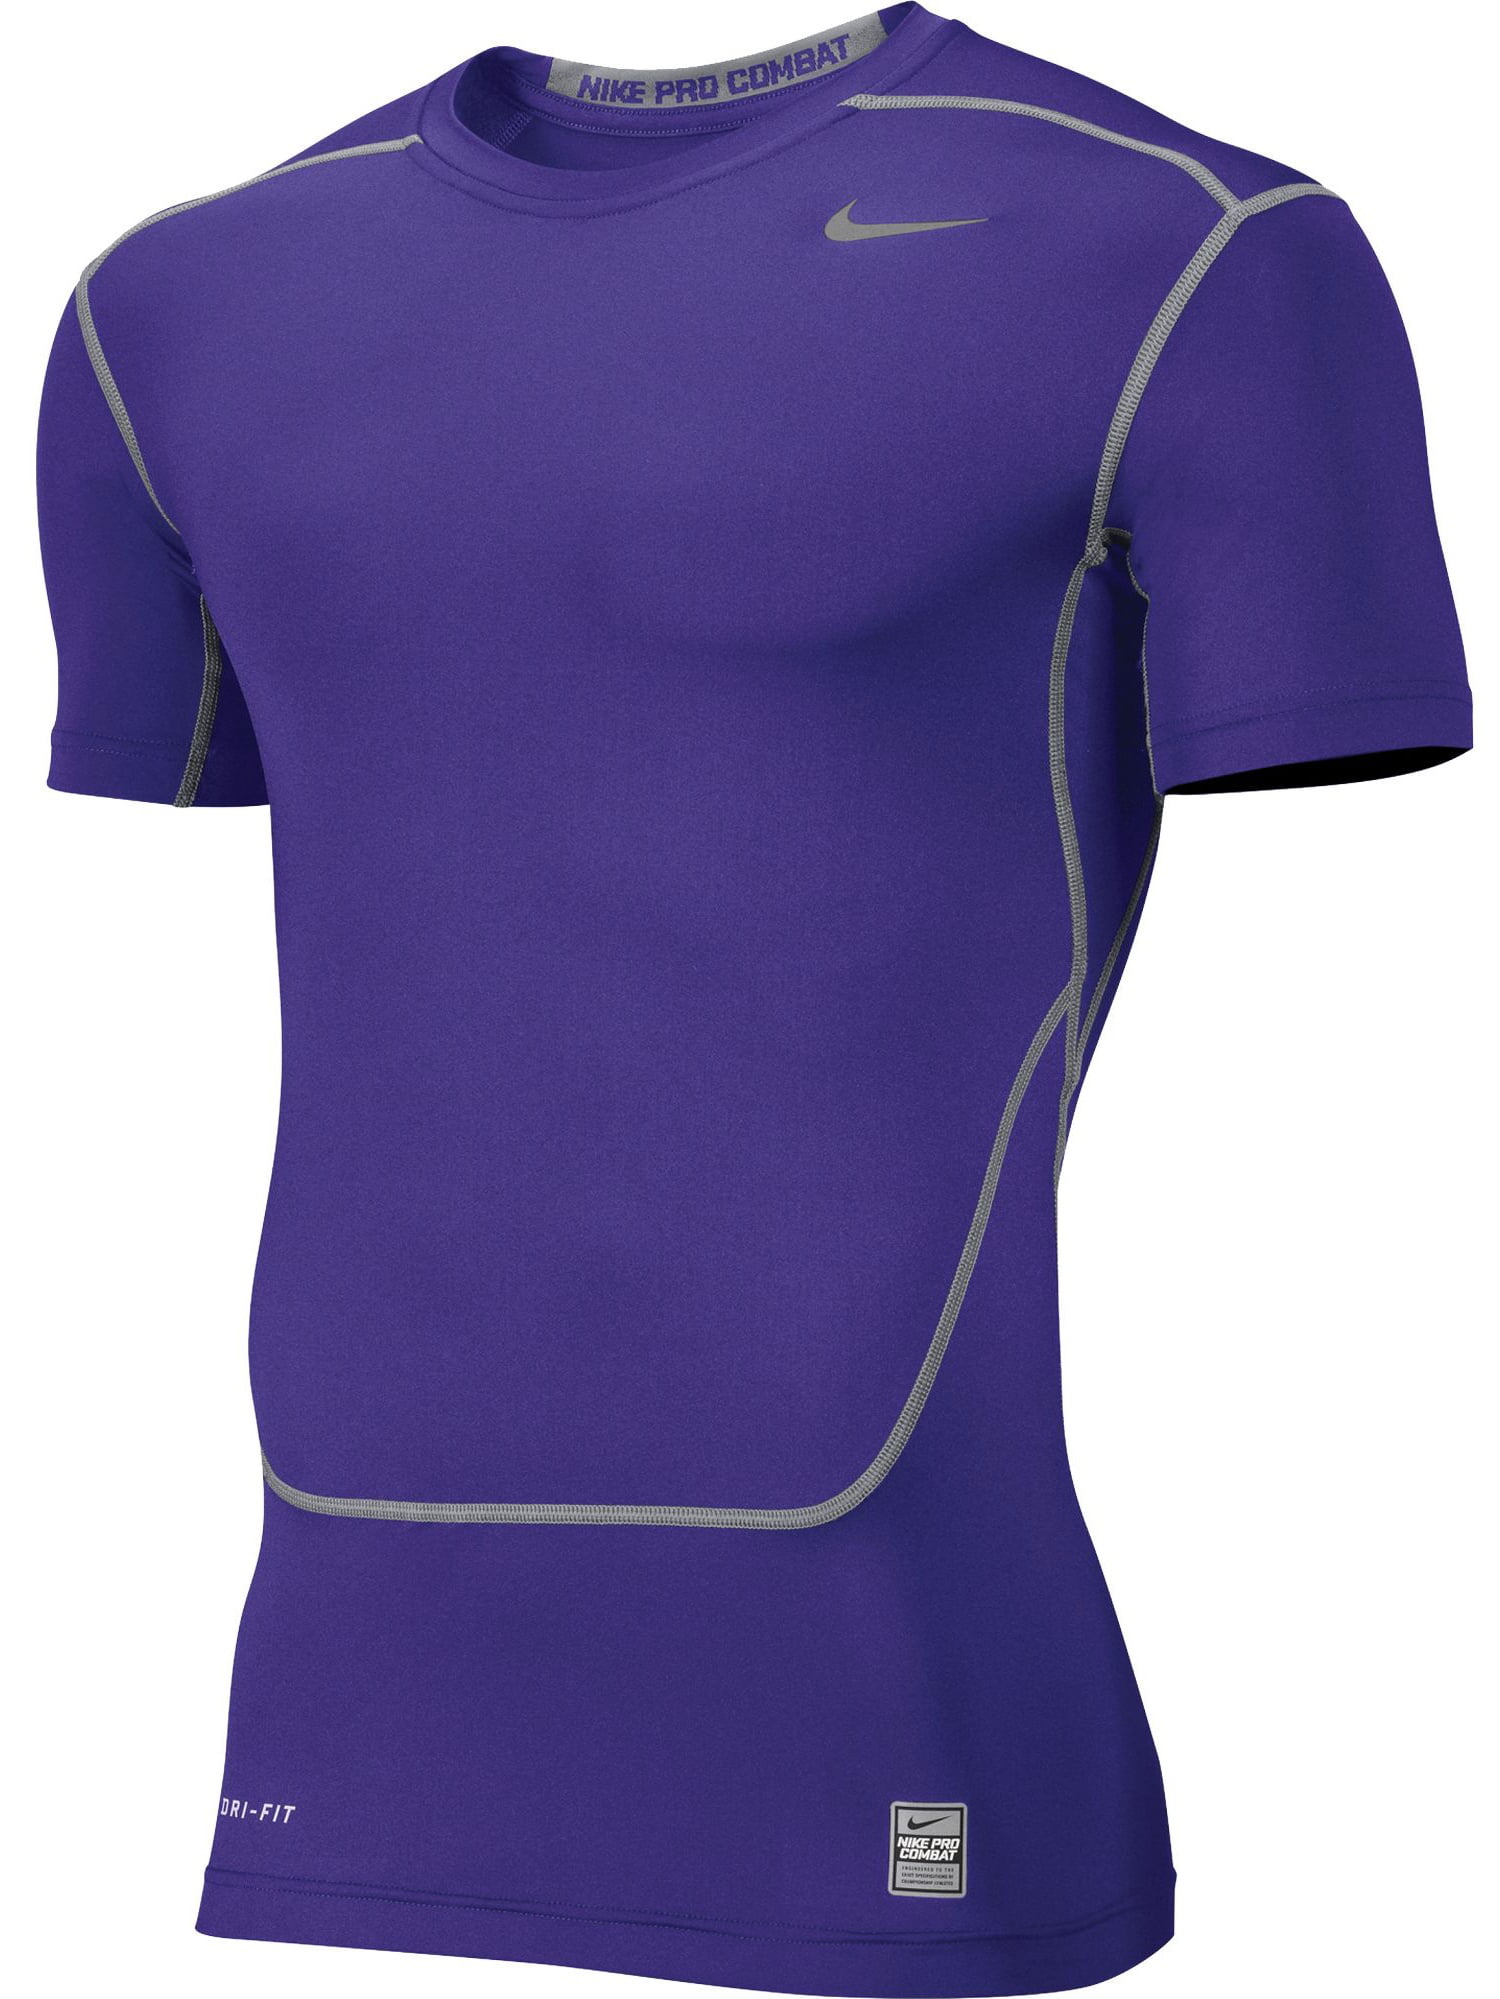 Nike Pro Combat Dri Fit Mens Short Sleeve Compression Tee Shirt Size L Navy